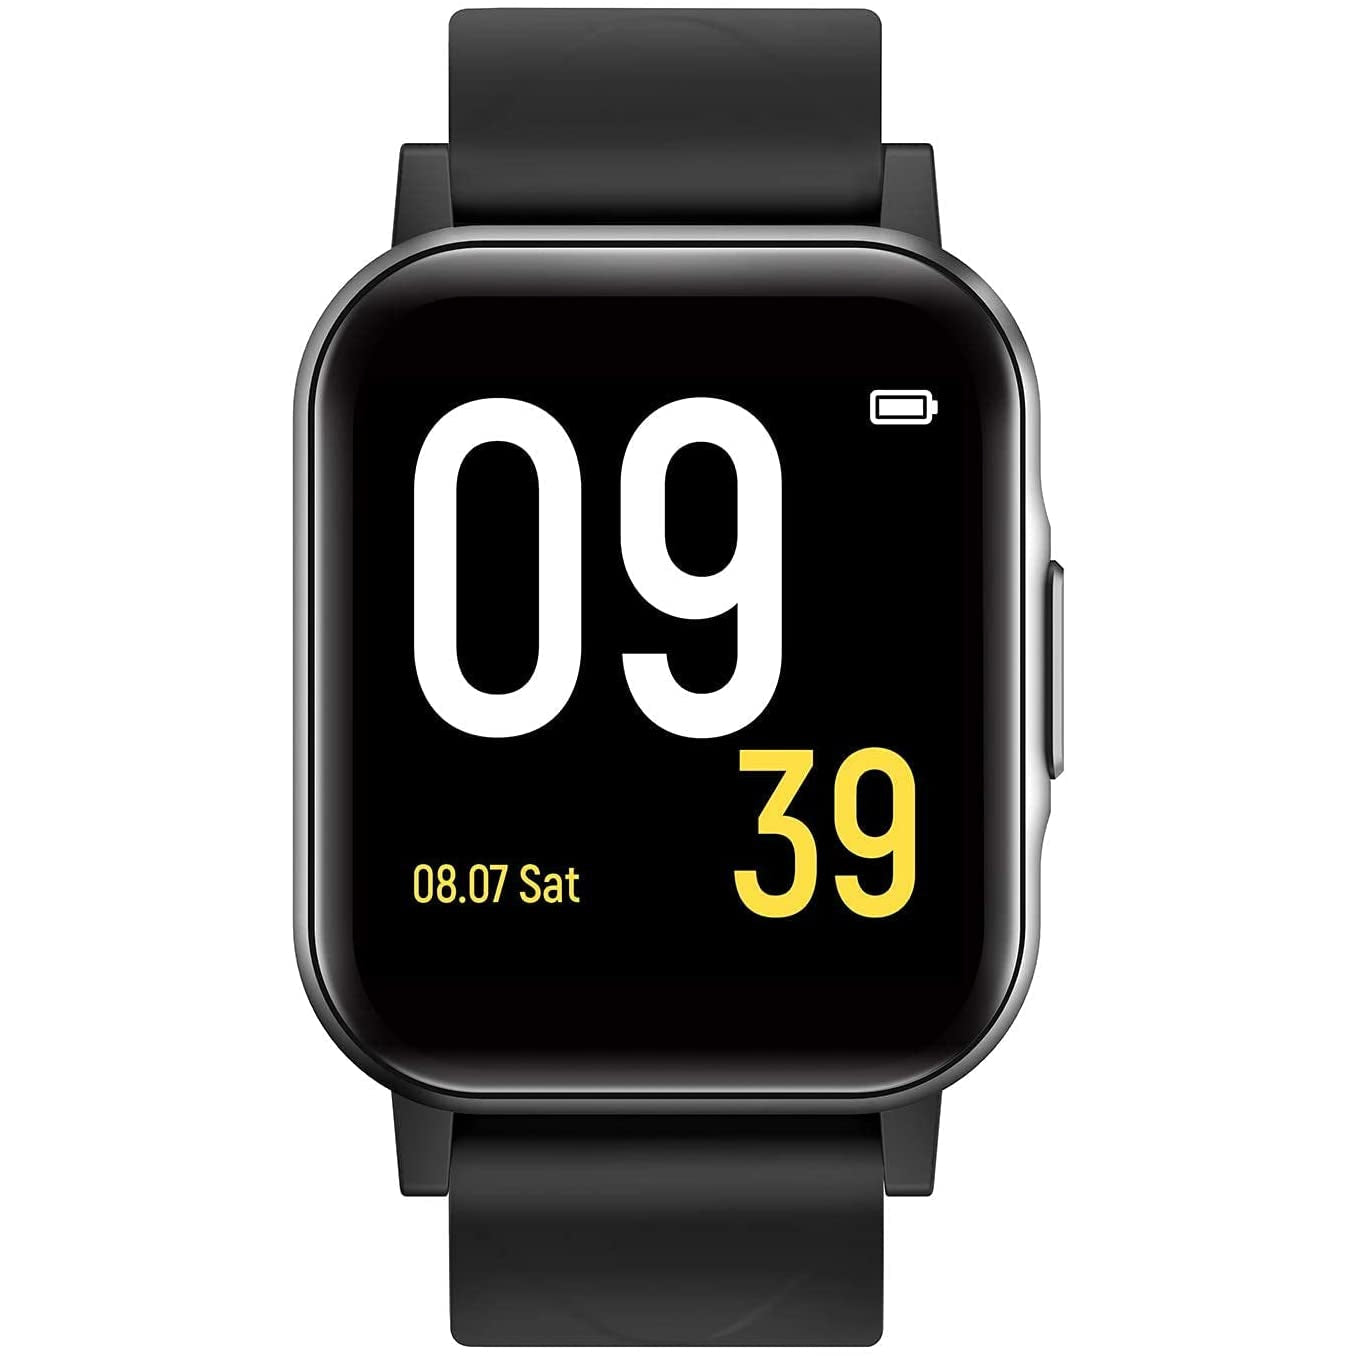 SoundPEATS Smart Watch Fitness Tracker - Black